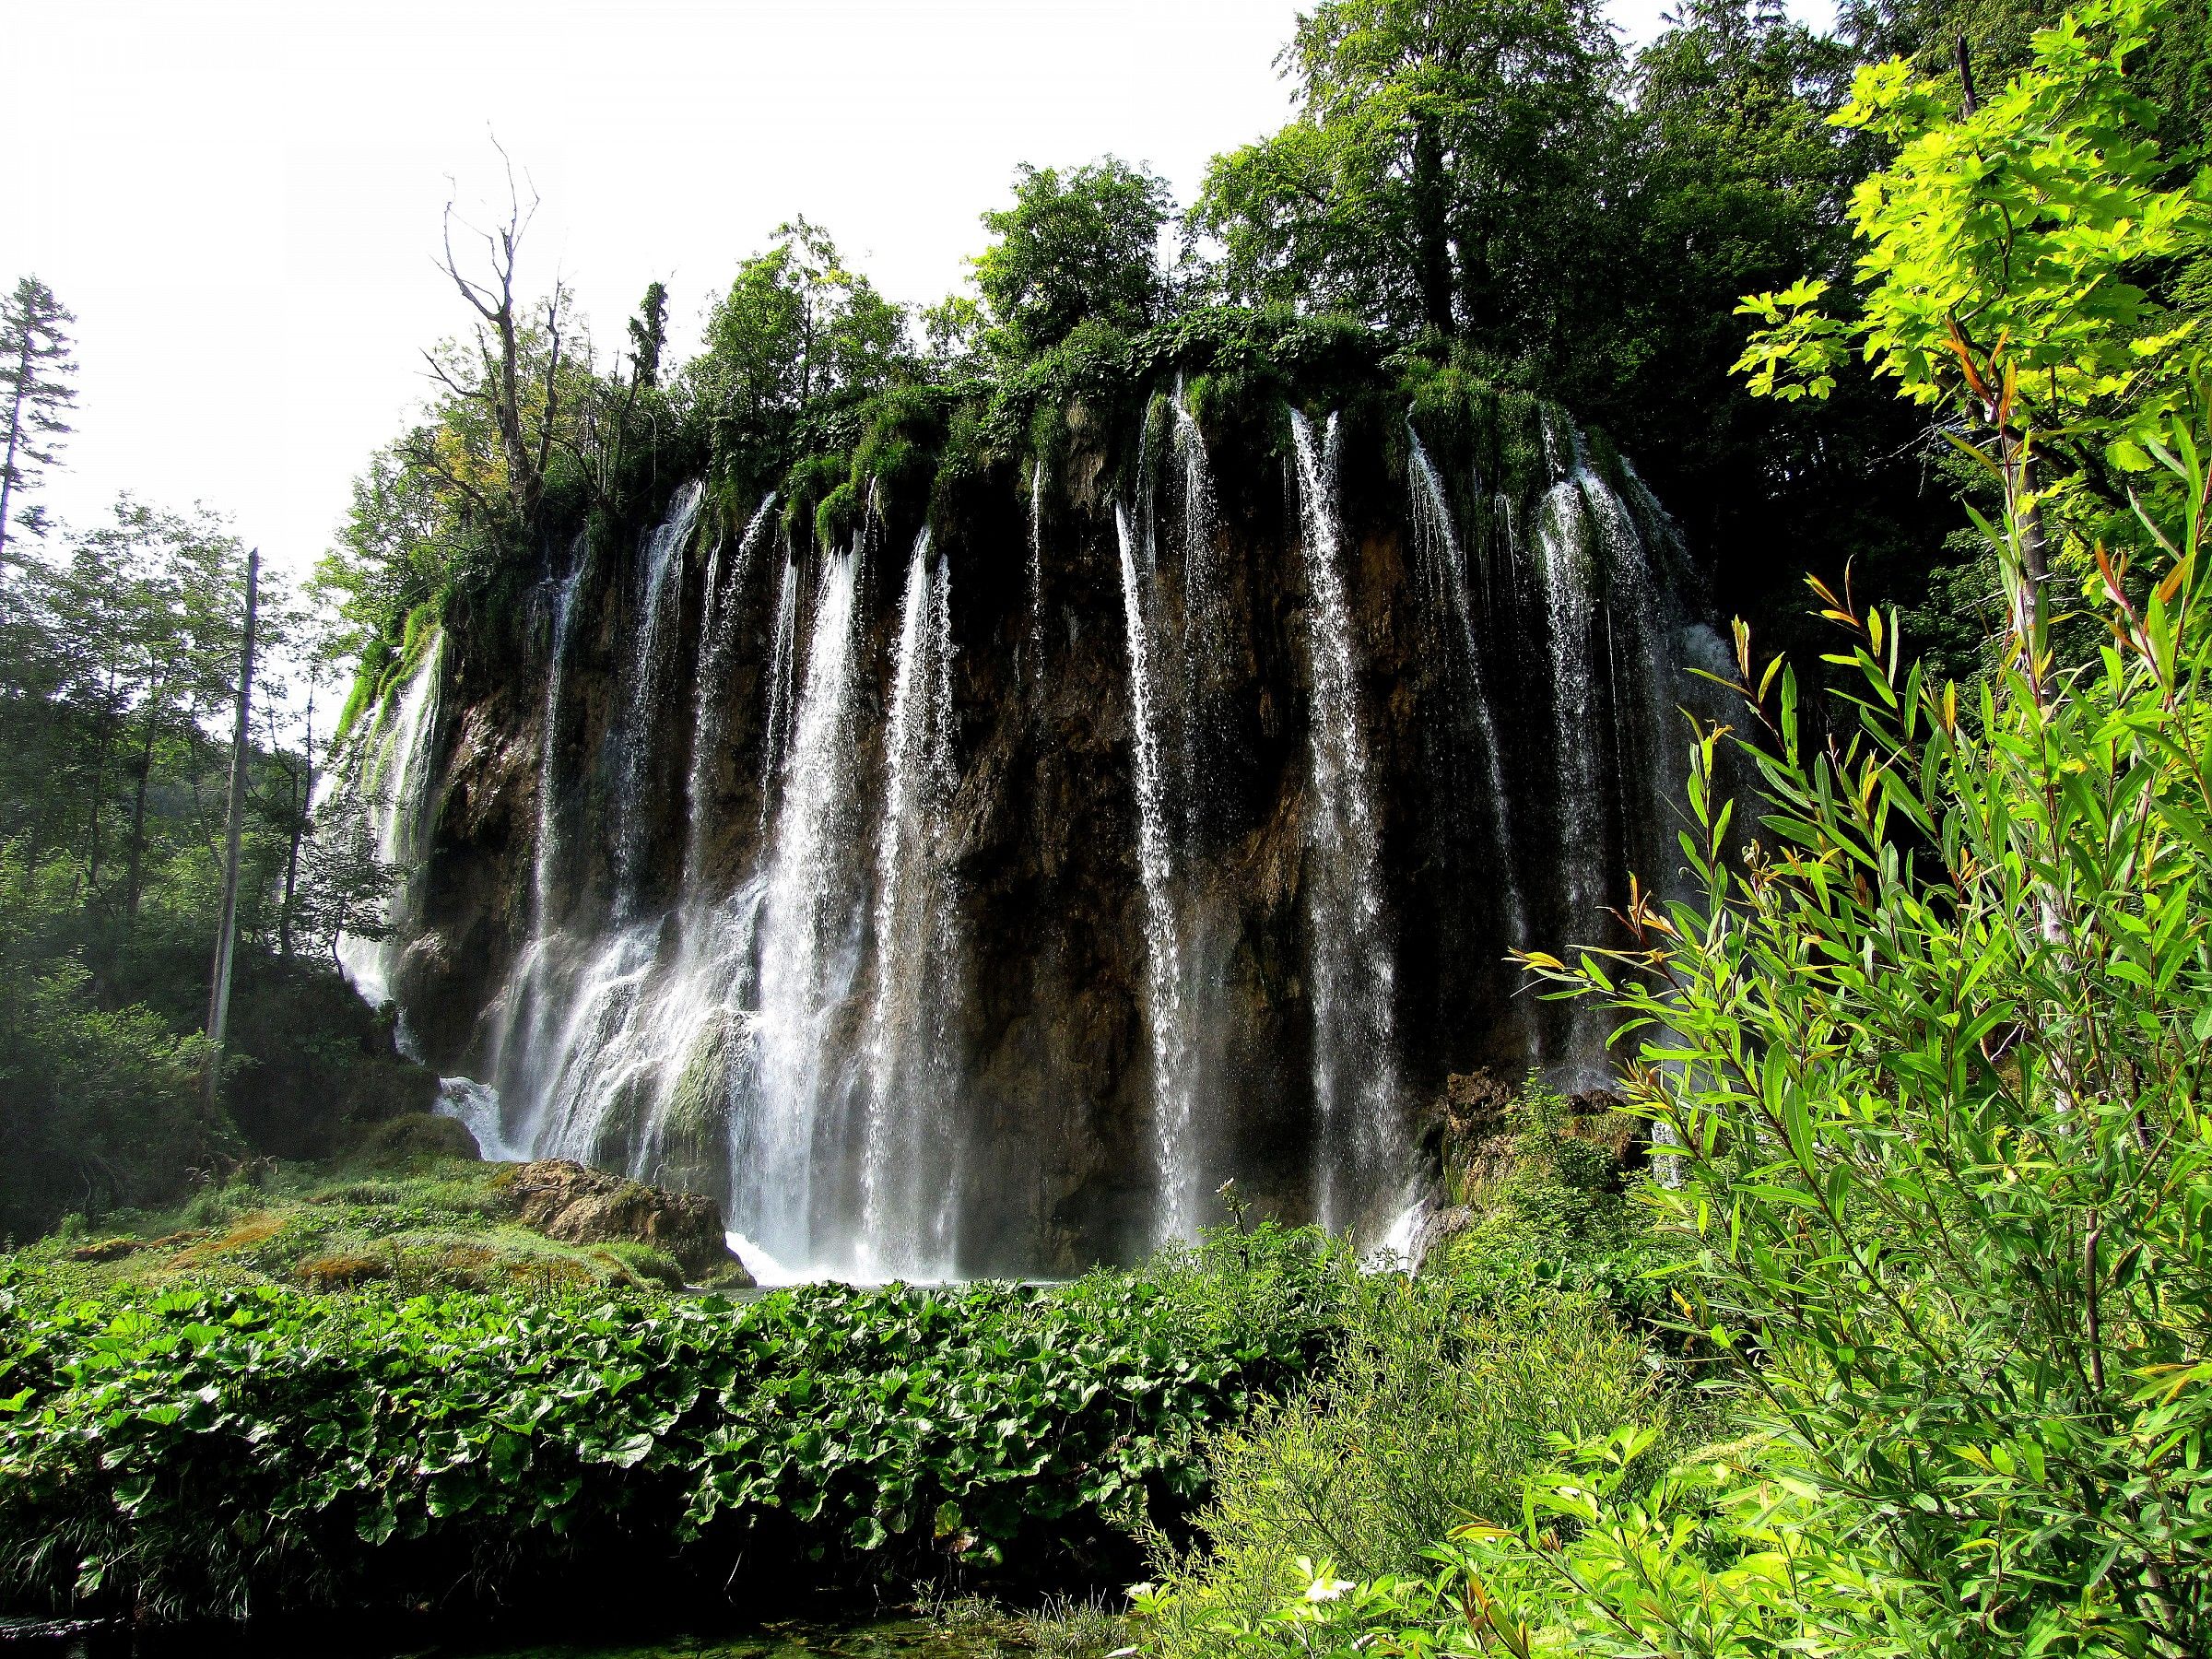 Another waterfall in Plitvice-Croatia...